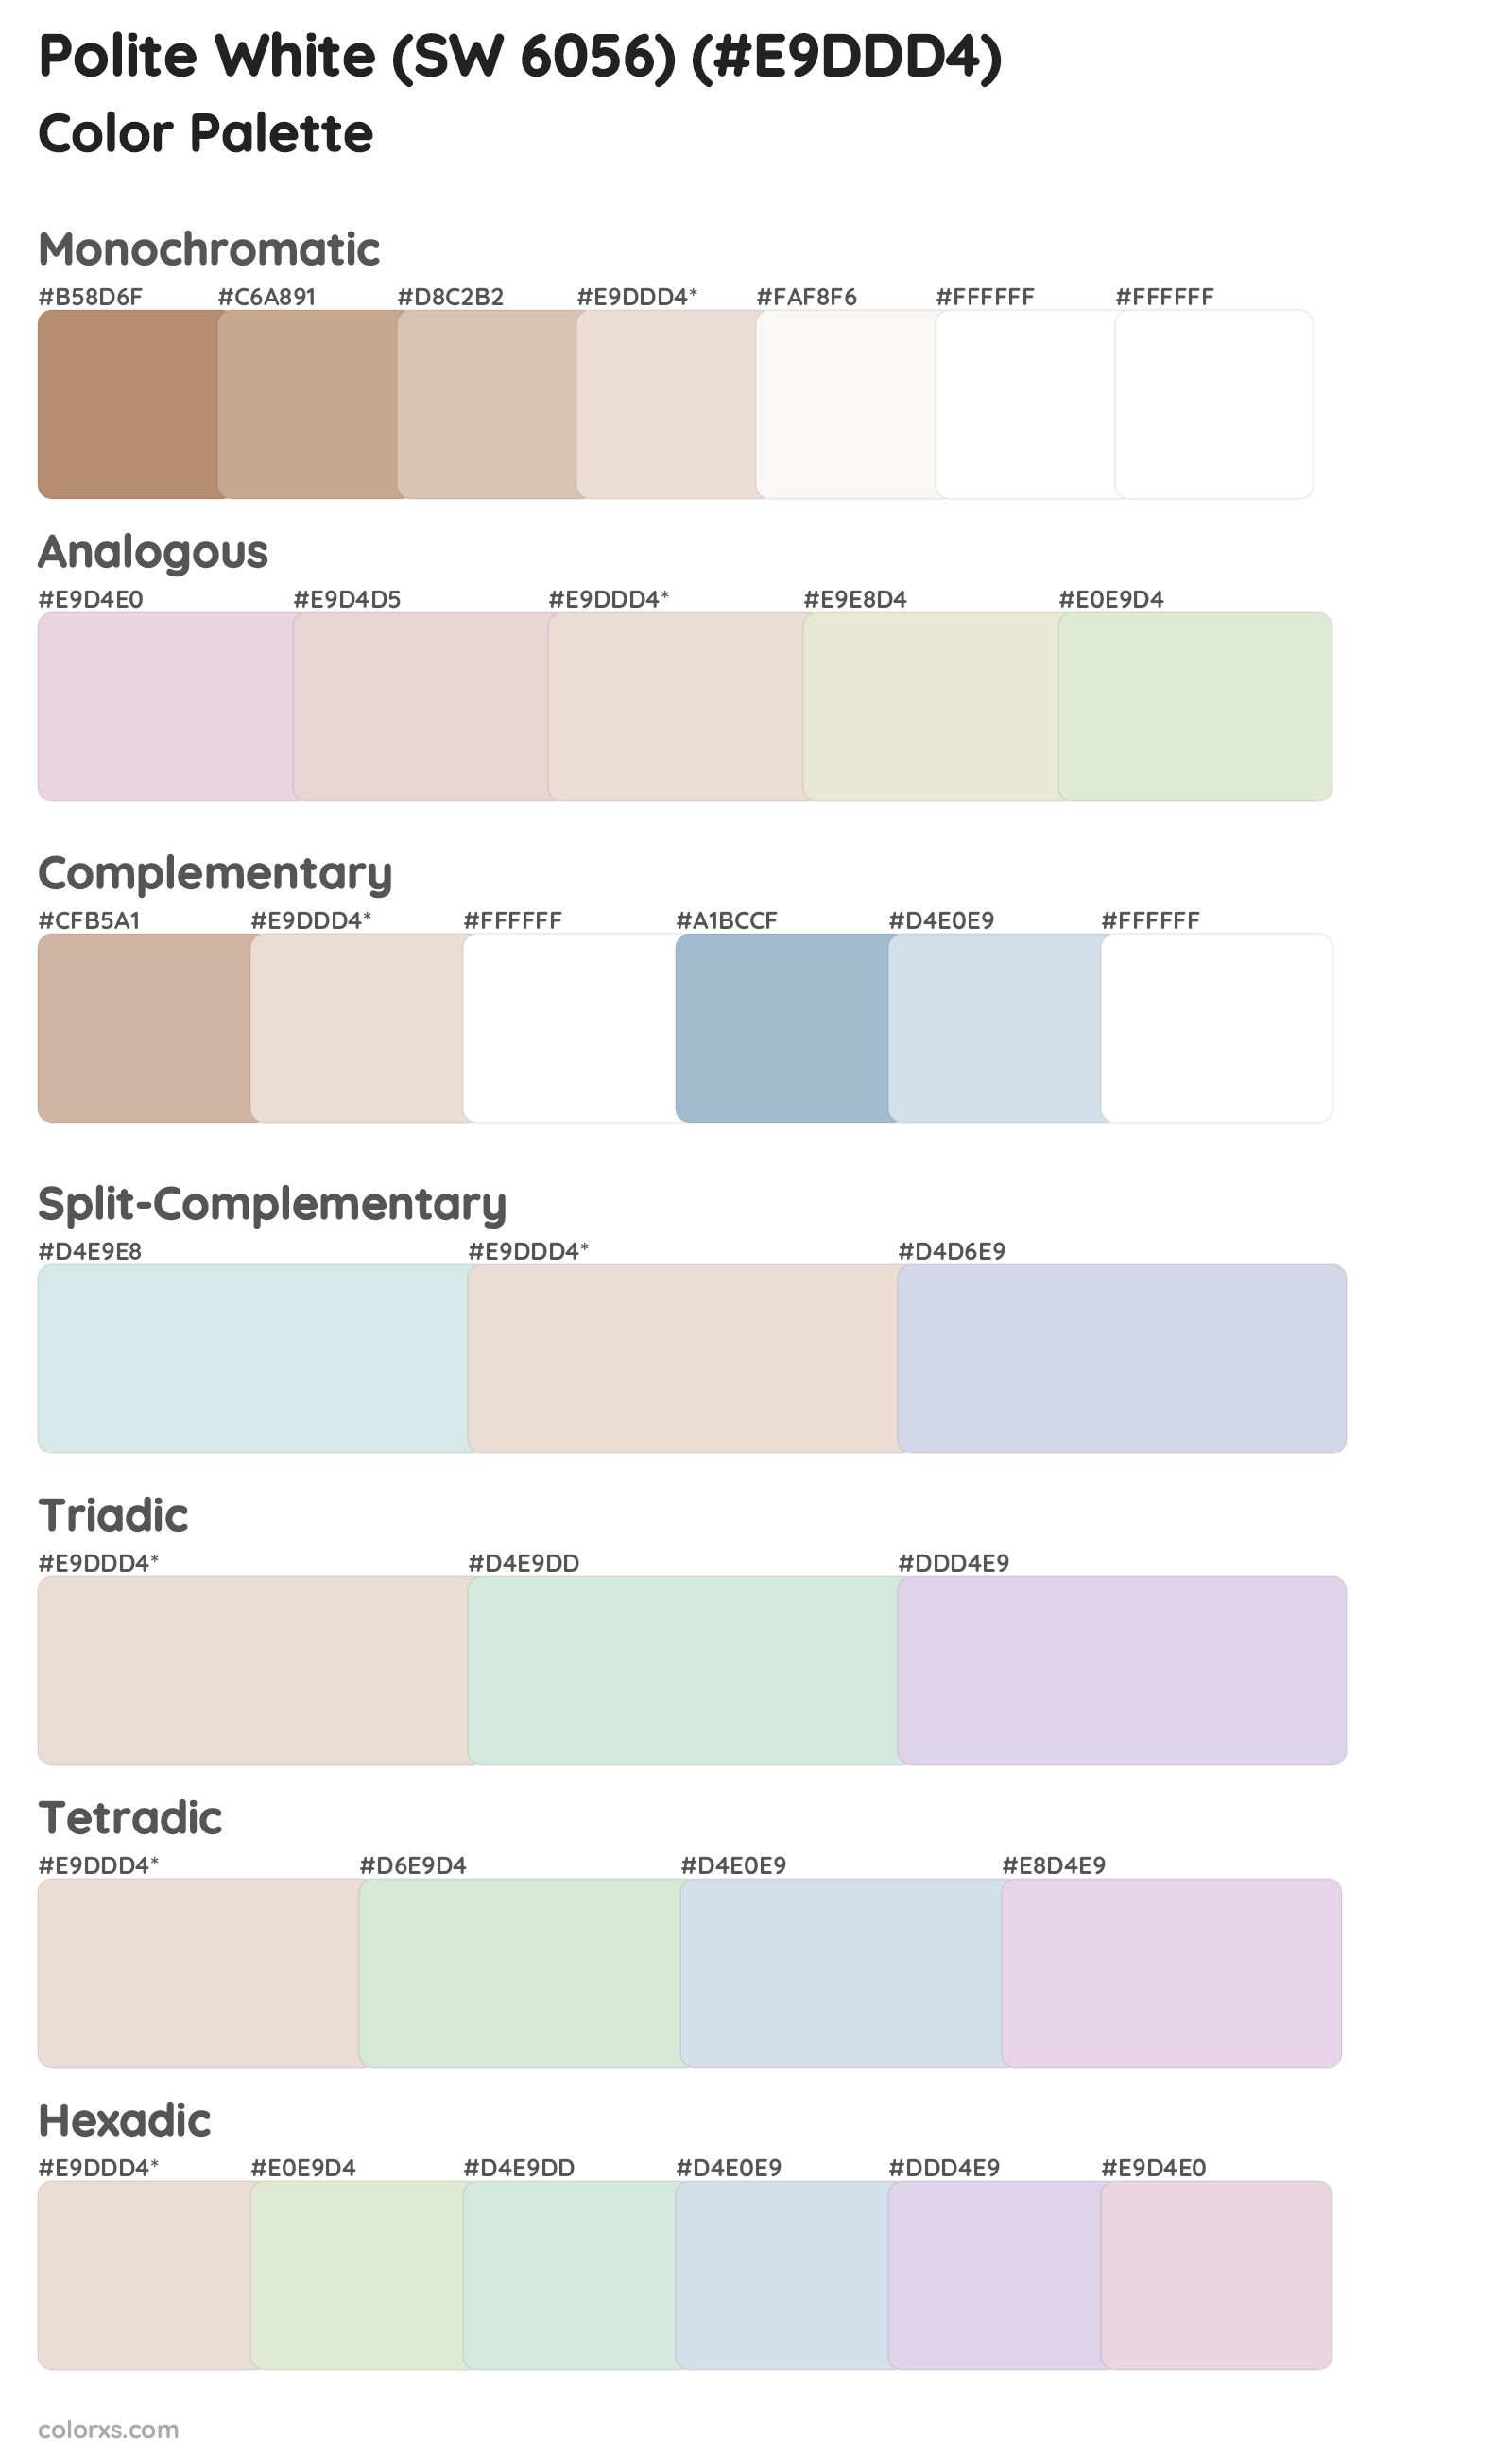 Polite White (SW 6056) Color Scheme Palettes